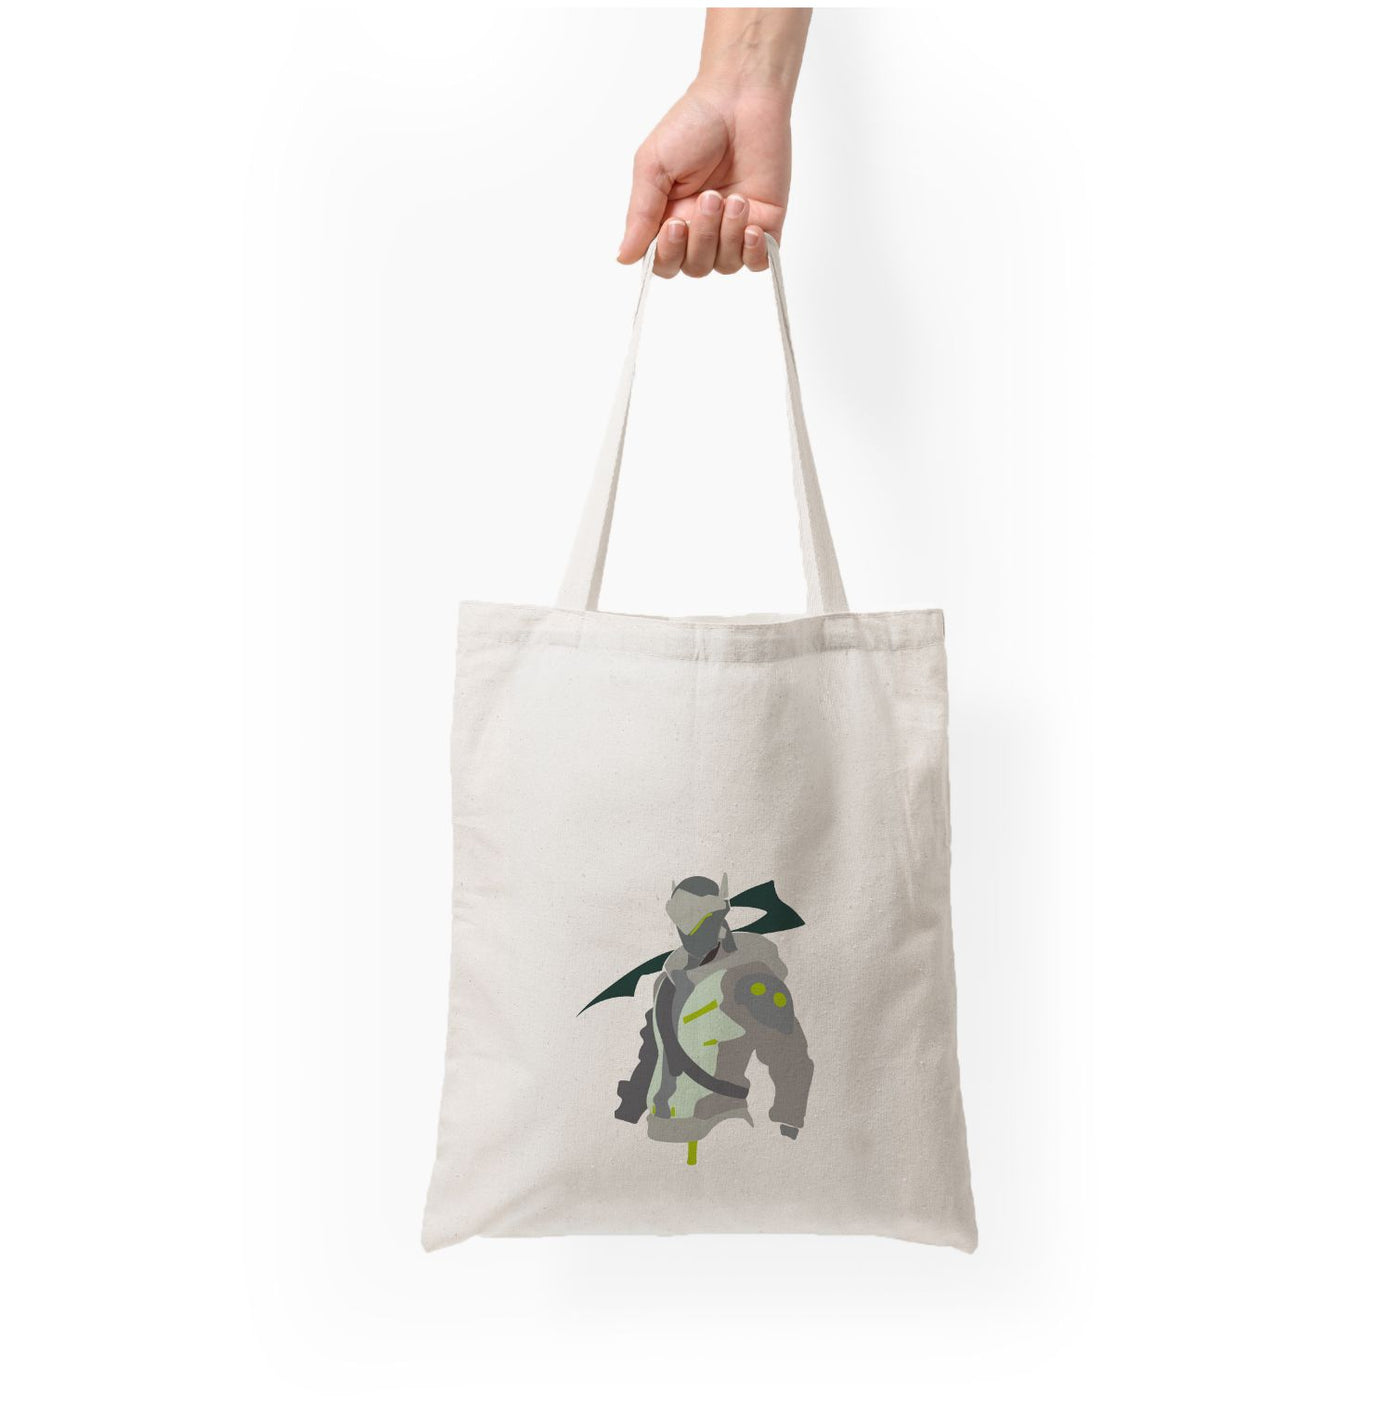 Genji - Overwatch Tote Bag